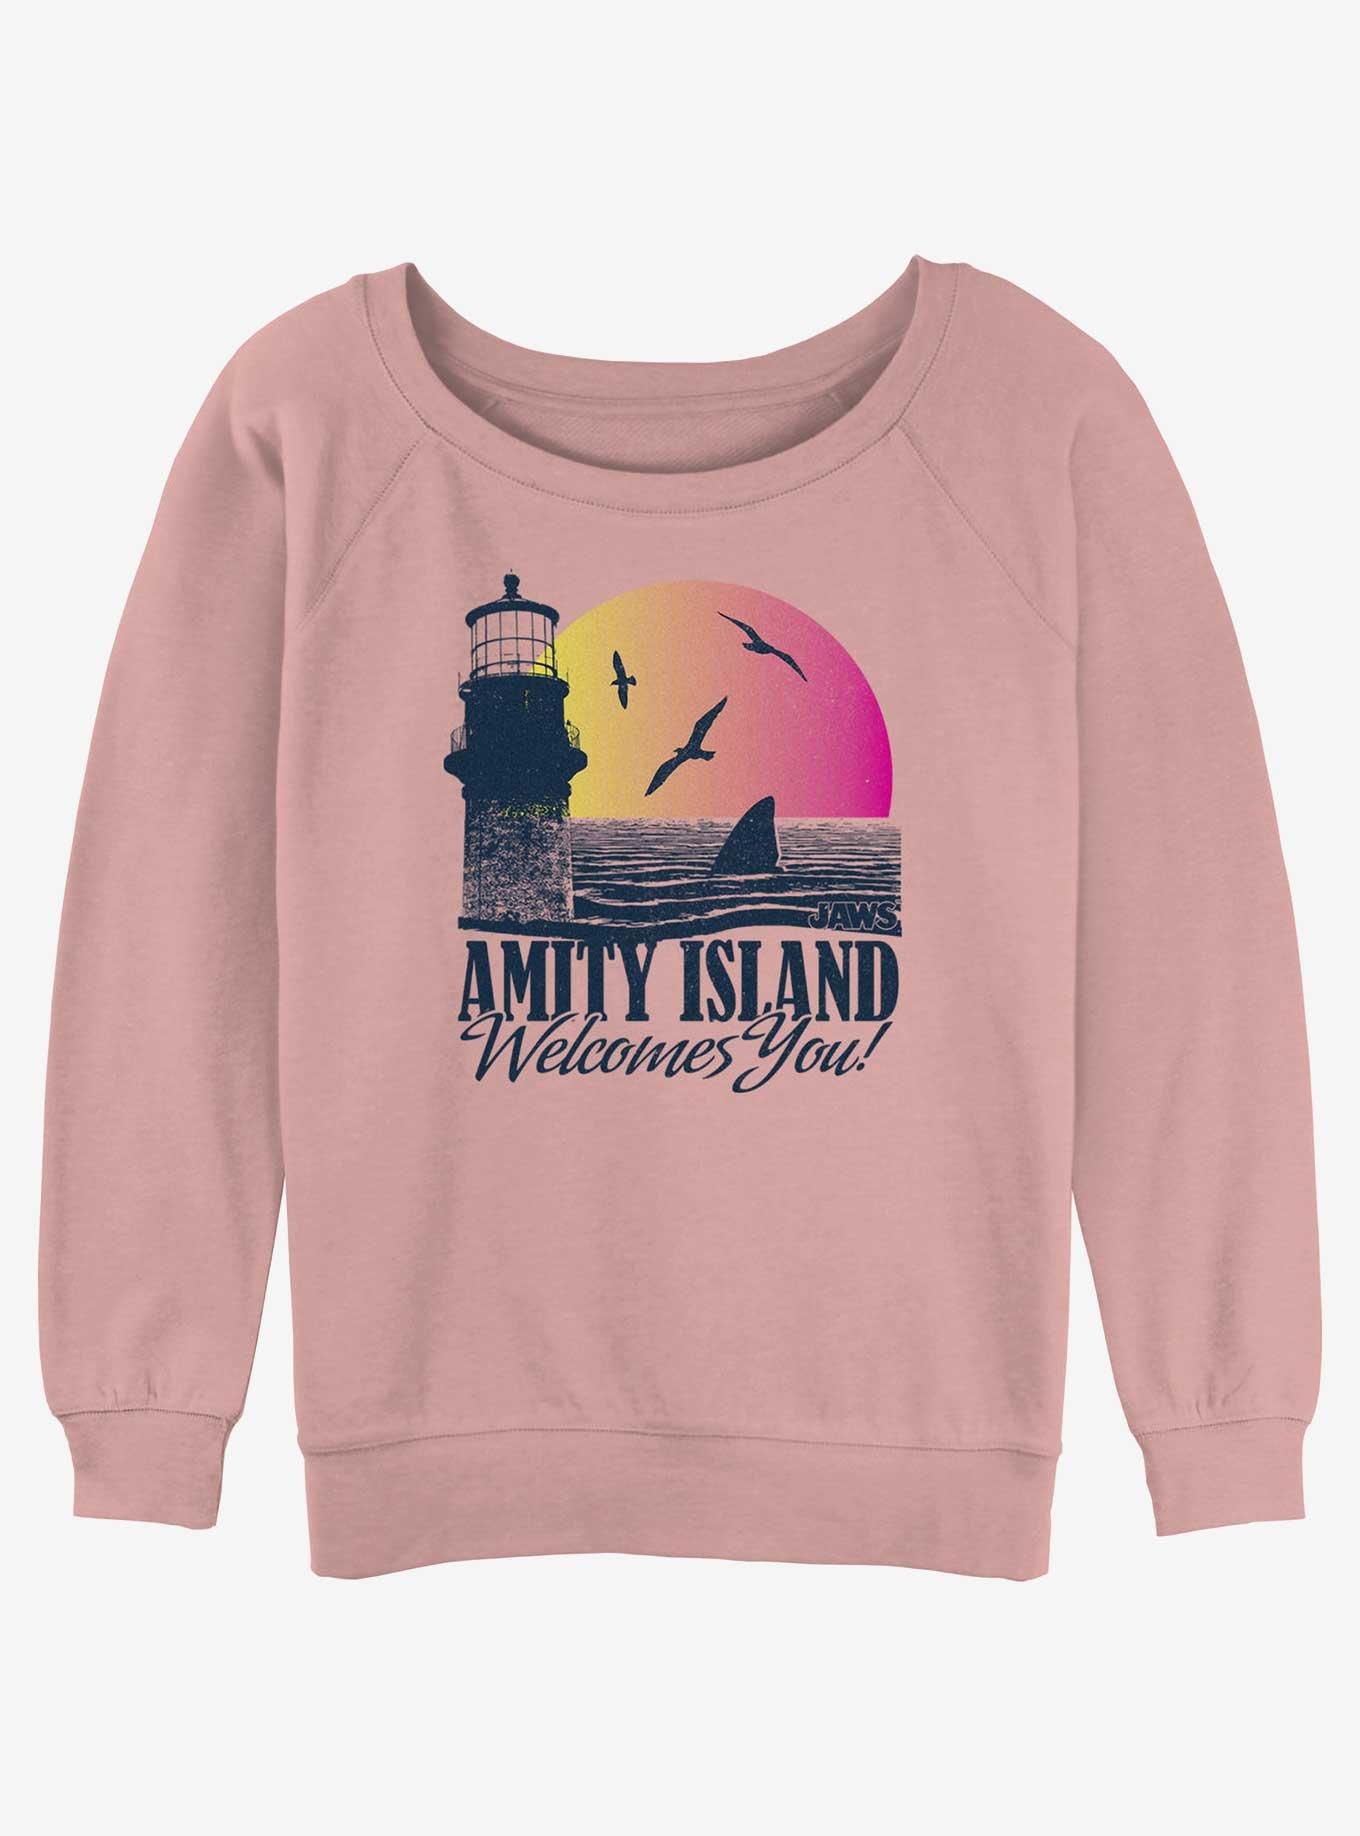 Jaws Amity Island Welcomes You Girls Slouchy Sweatshirt, DESERTPNK, hi-res